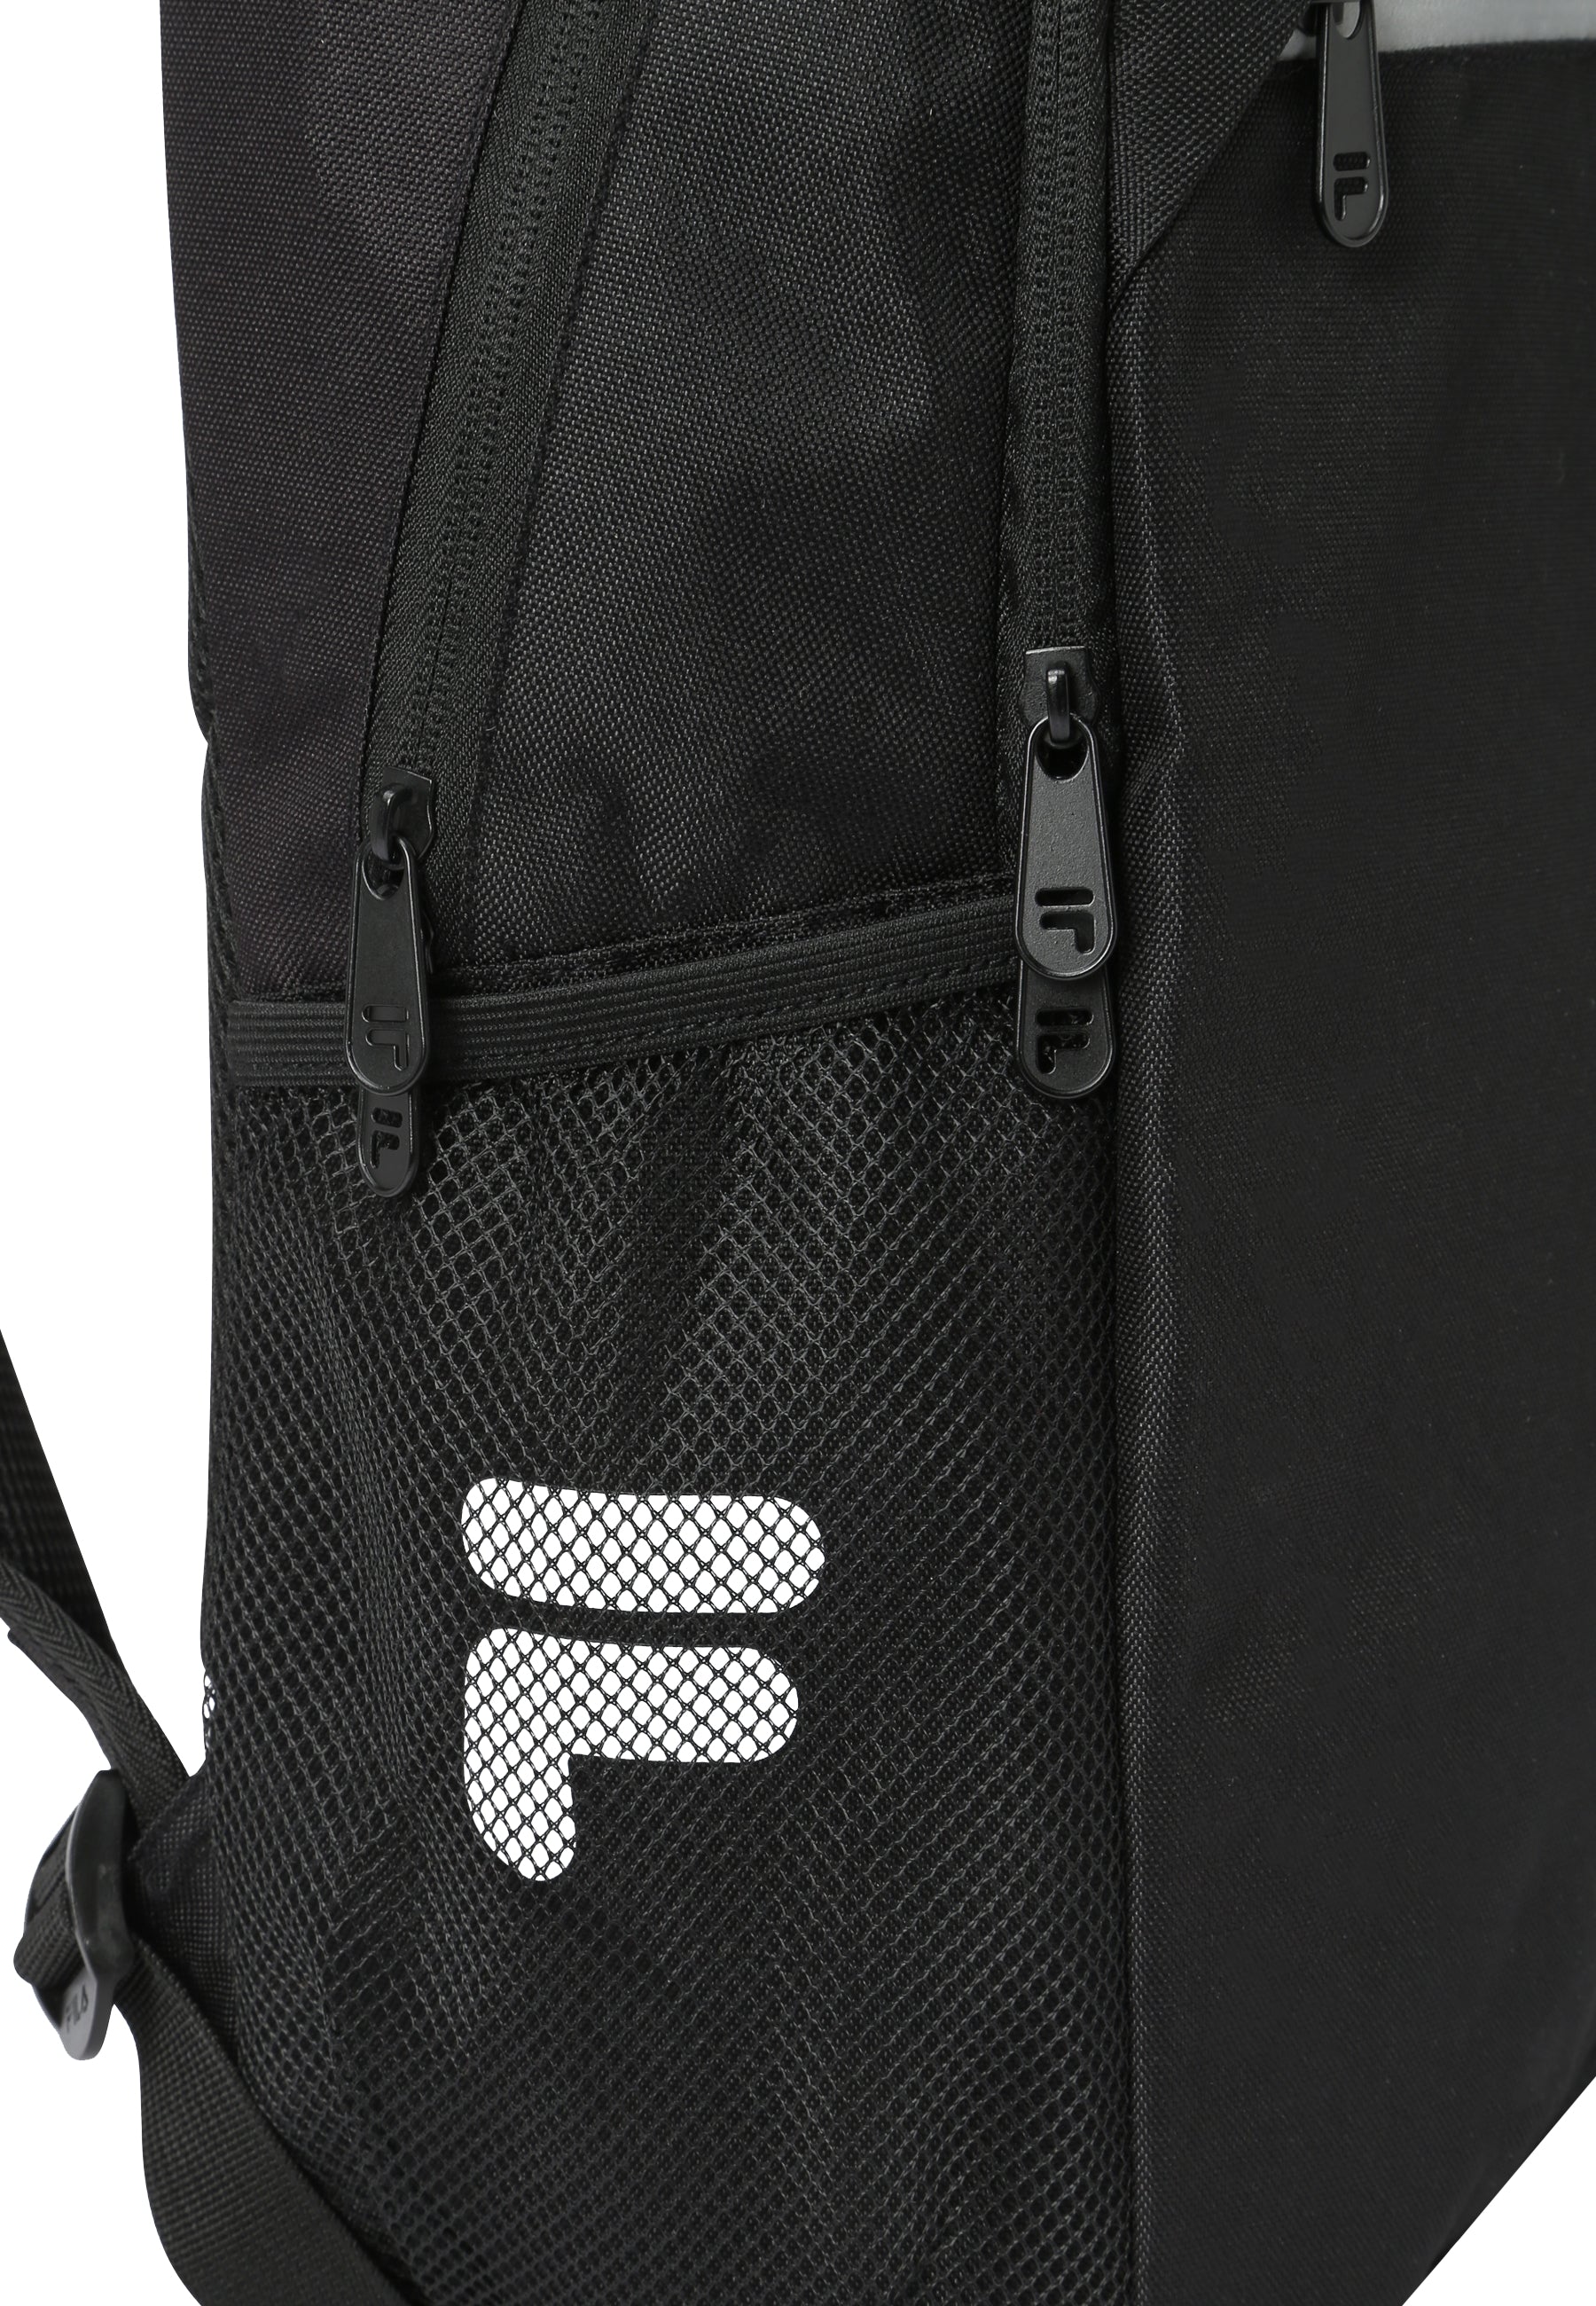 Folsom Active Vertical Backpack in Black Rucksäcke Fila   